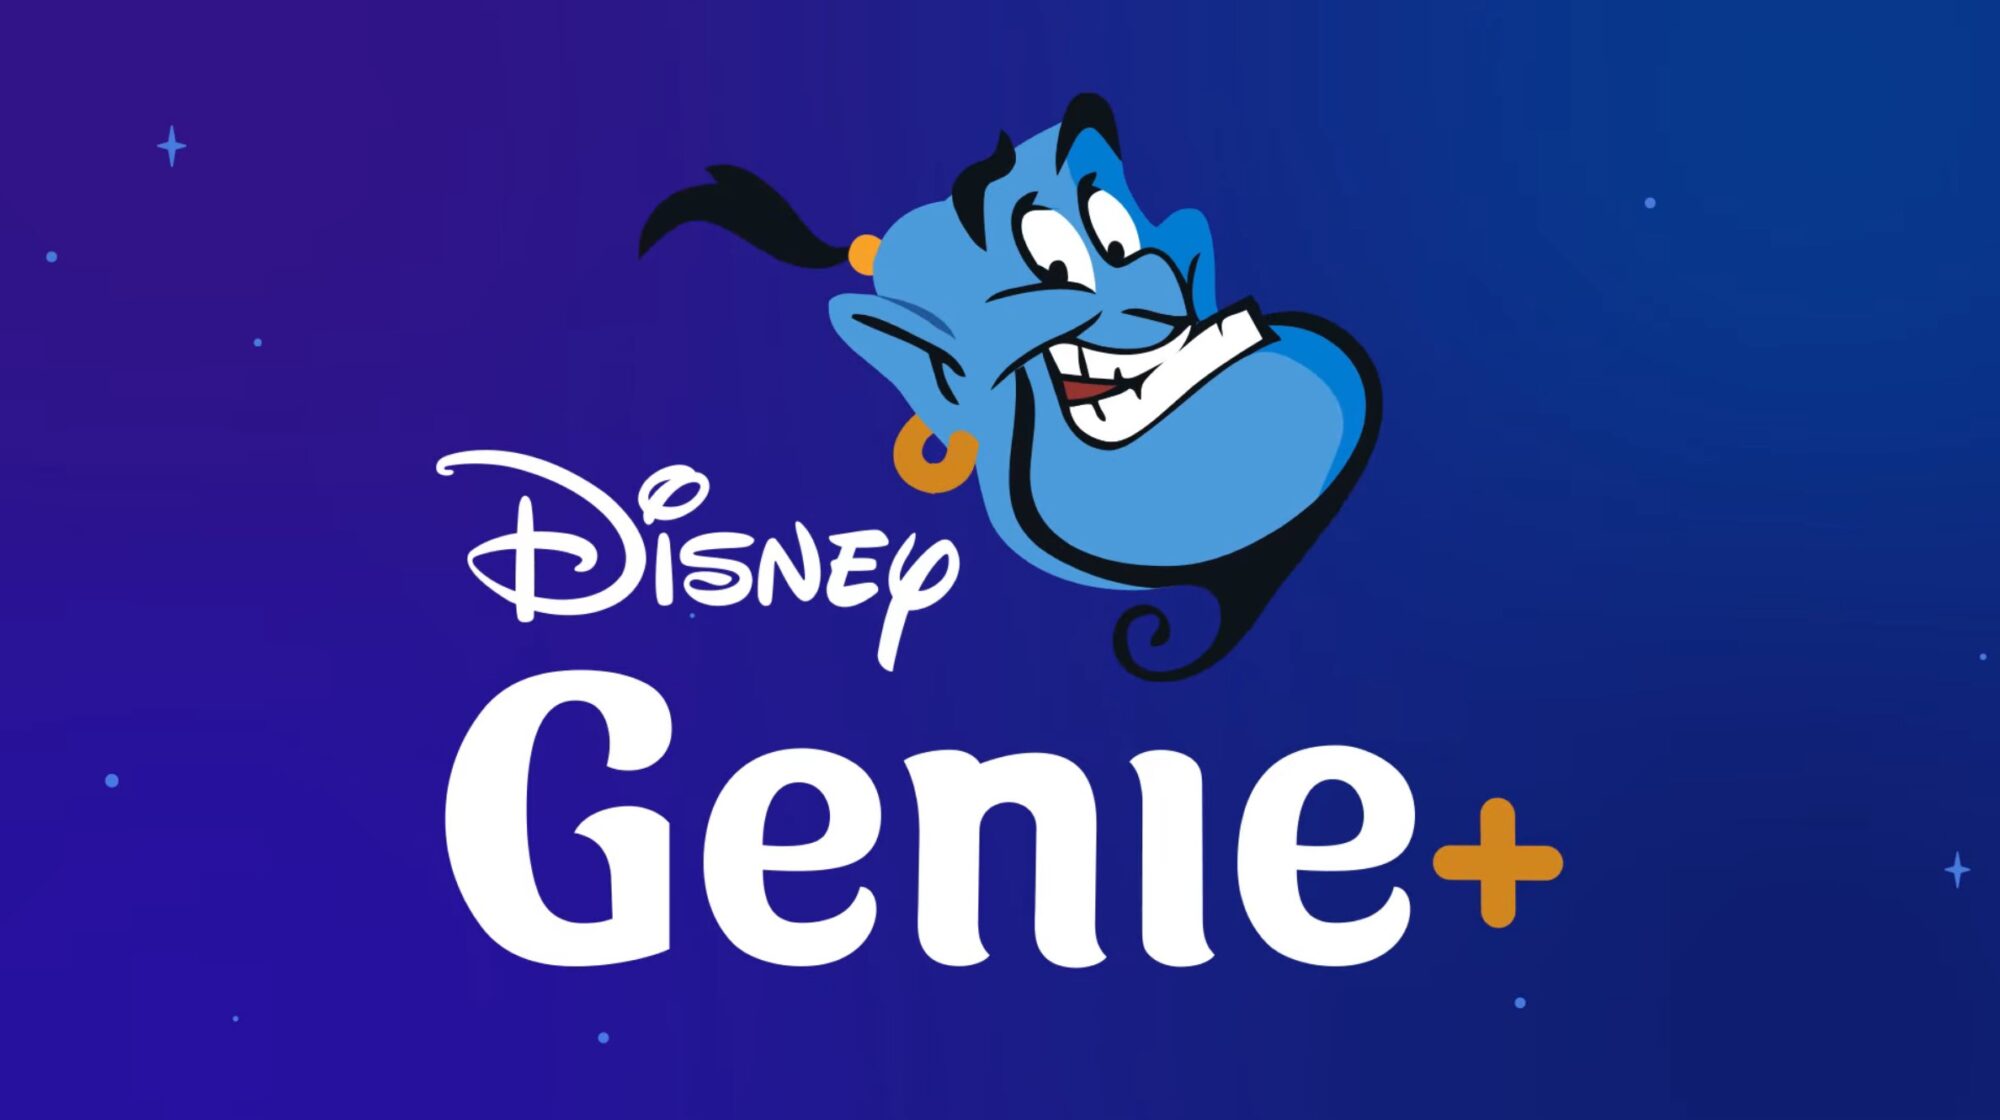 Differences Between Disney Genie, Disney Genie+, and